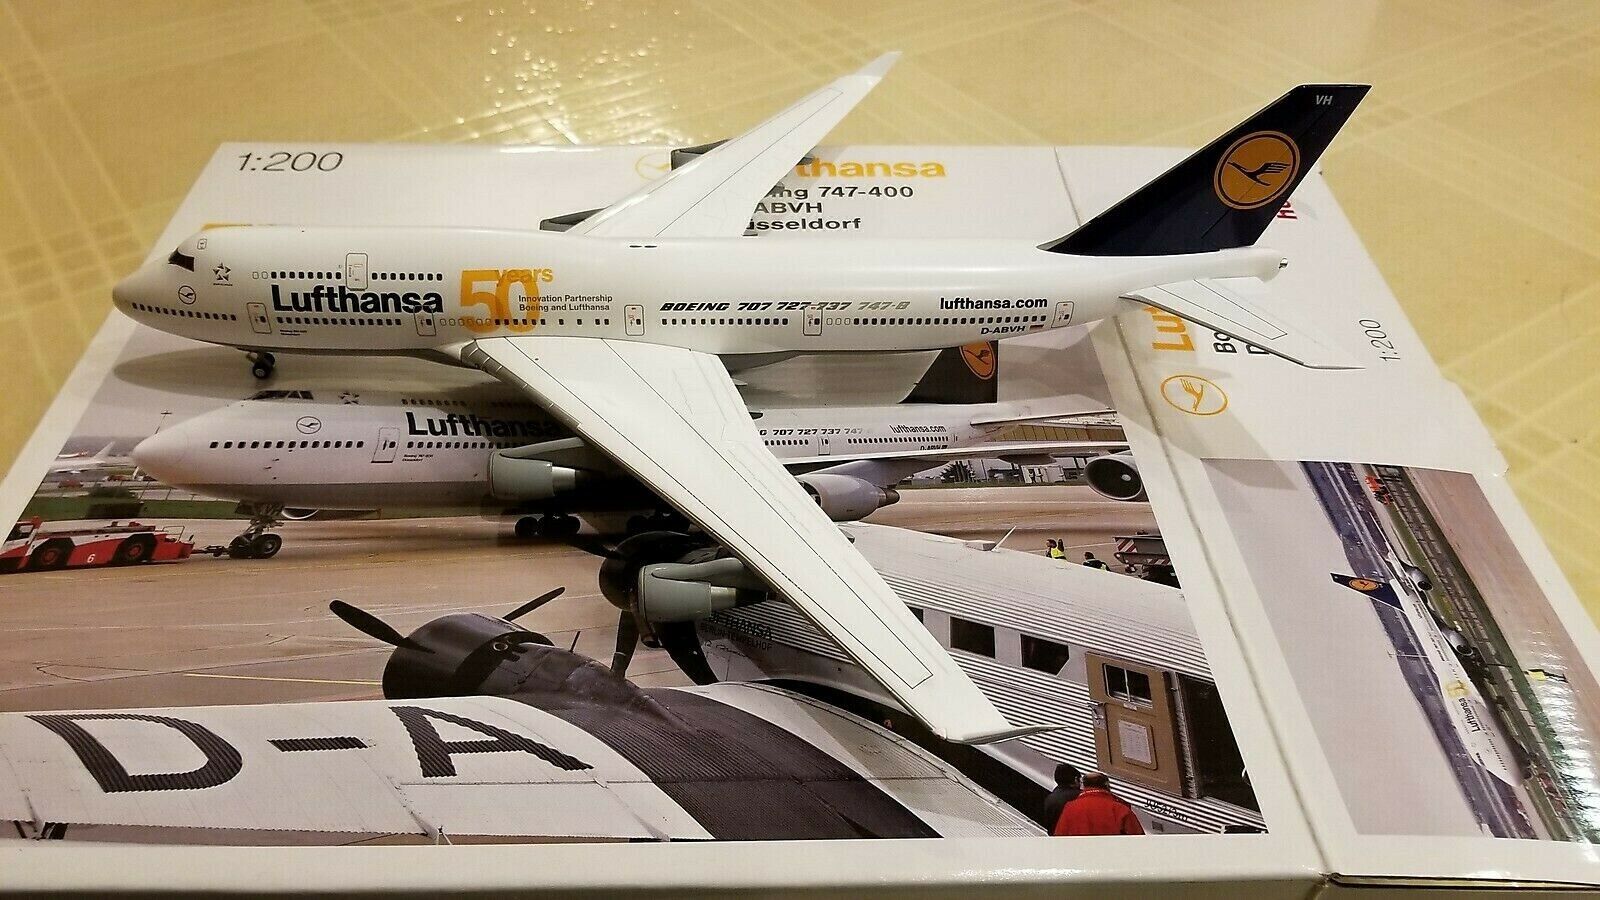 Herpa Lufthansa B 747-430 1:200 553735 50 Years Co-op Boeing Dusseldorf D-ABVH